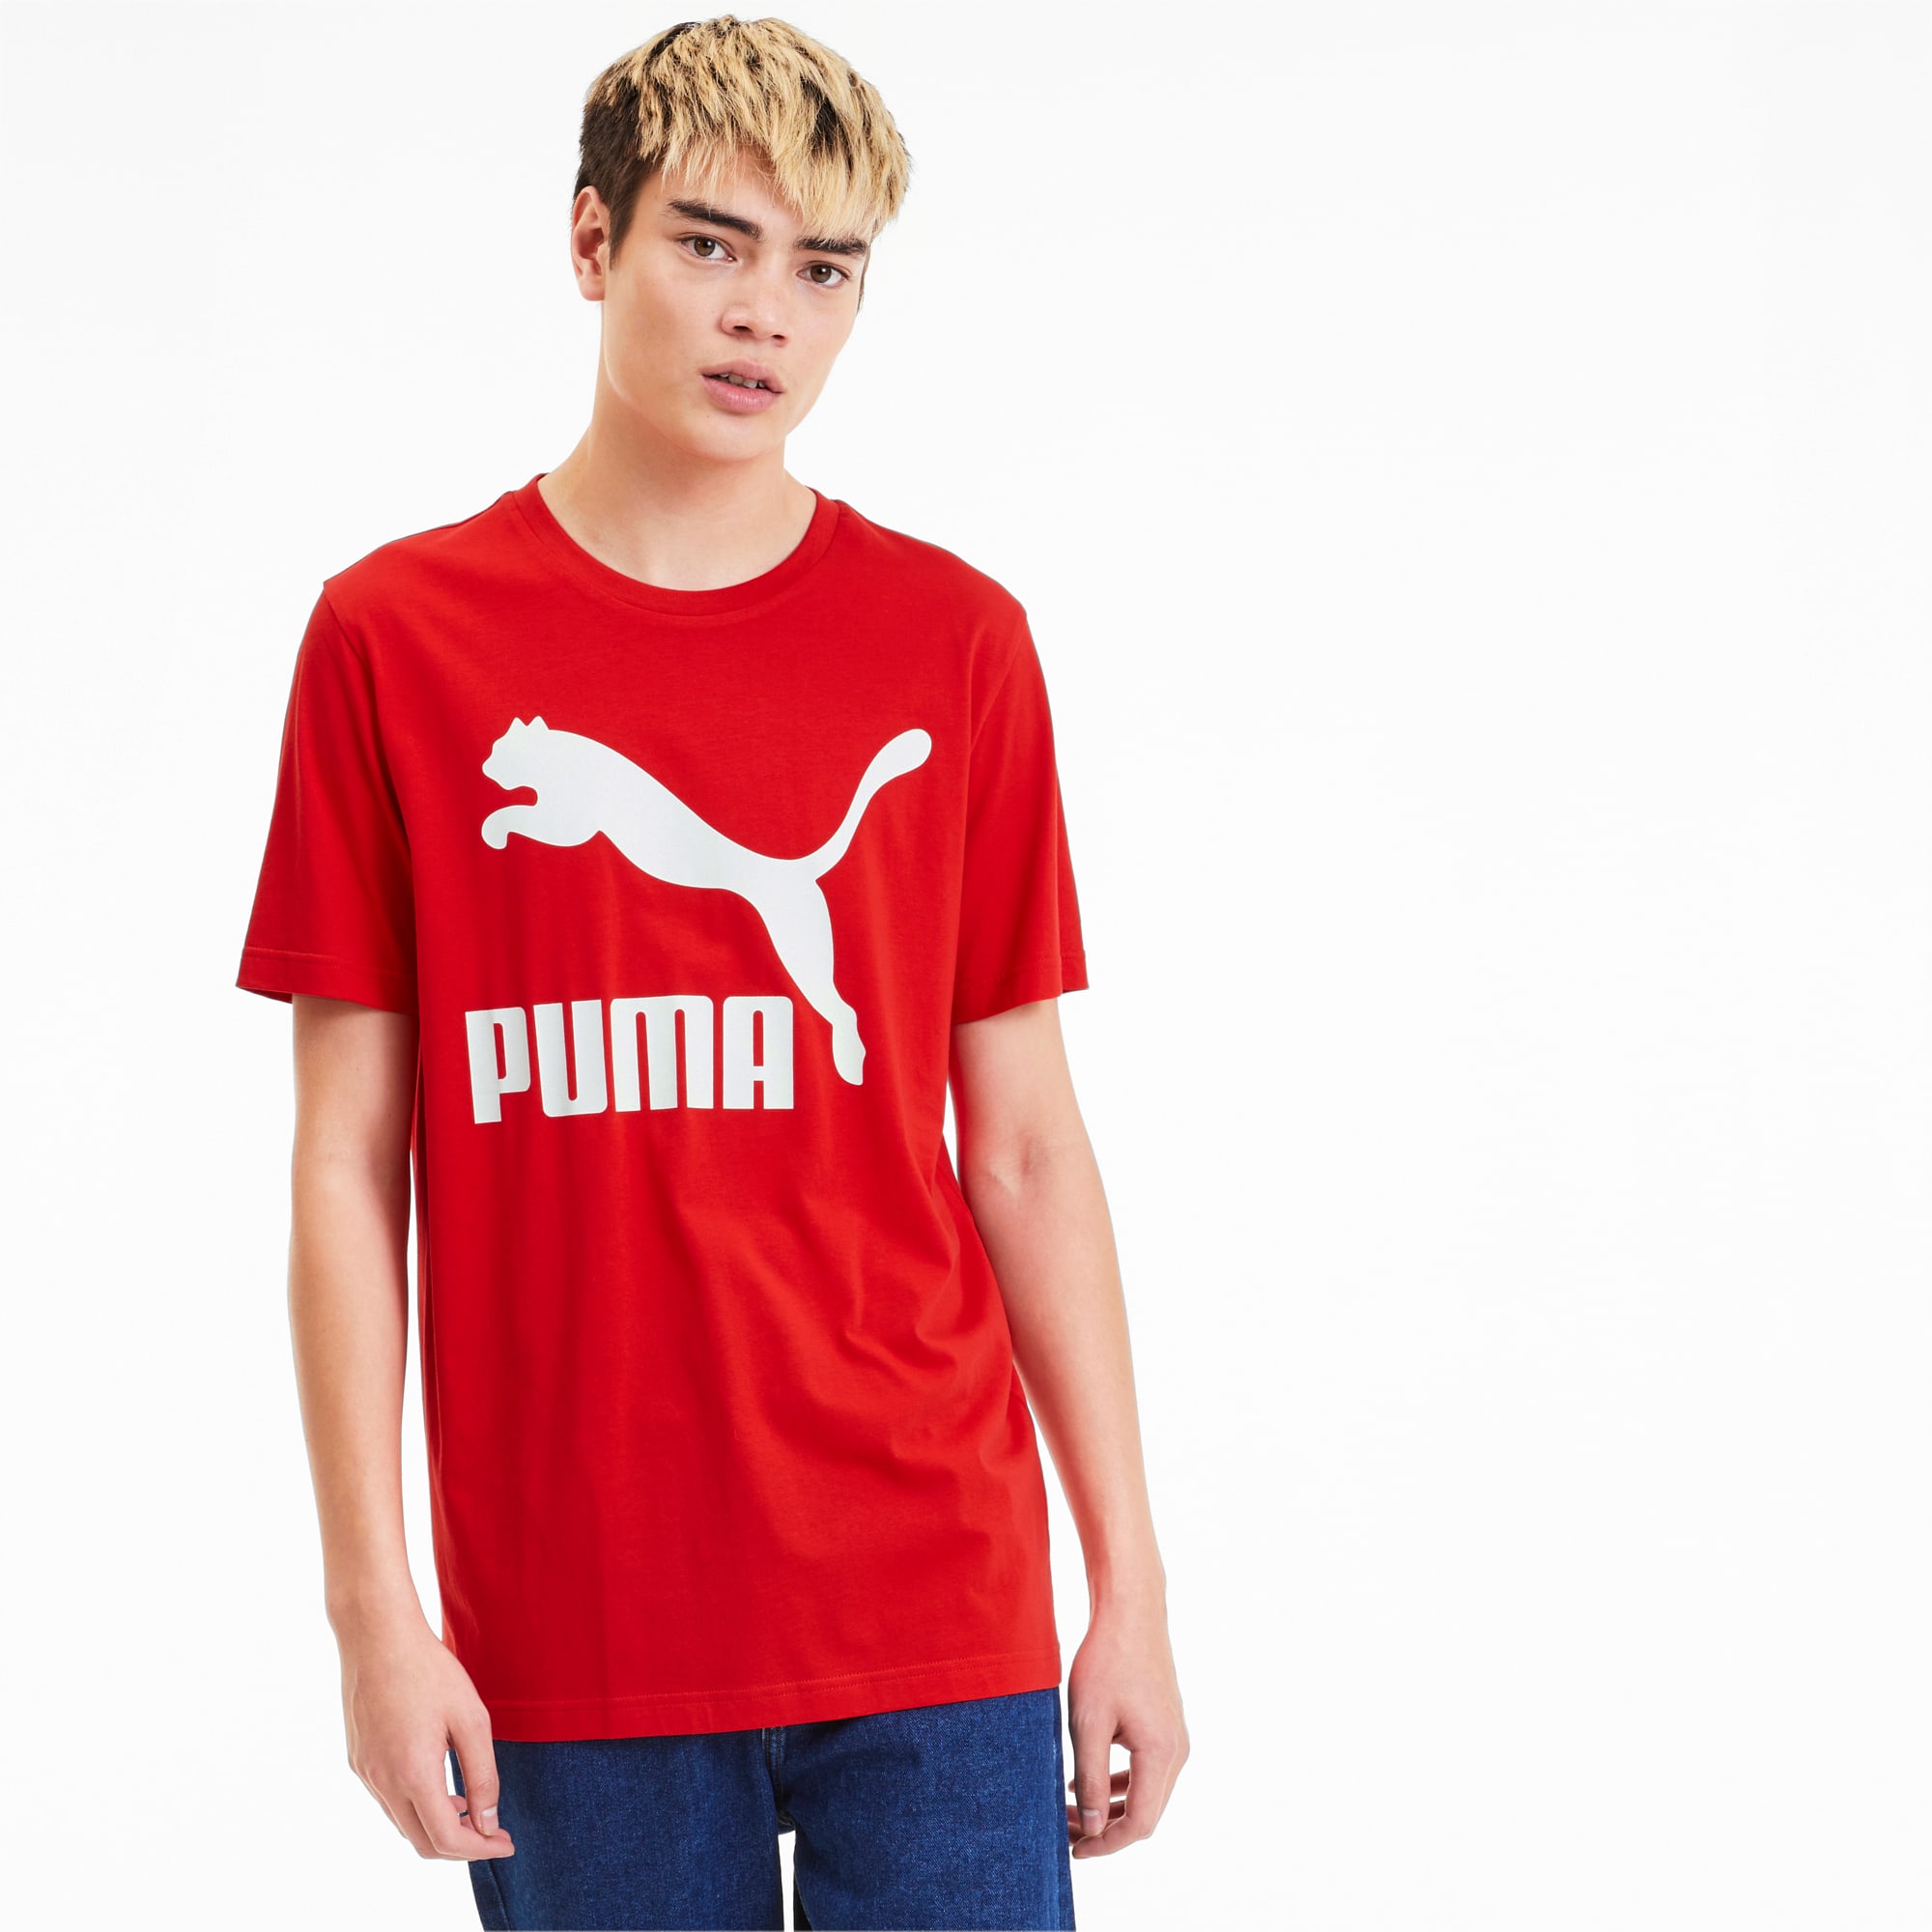 does puma clothing run small